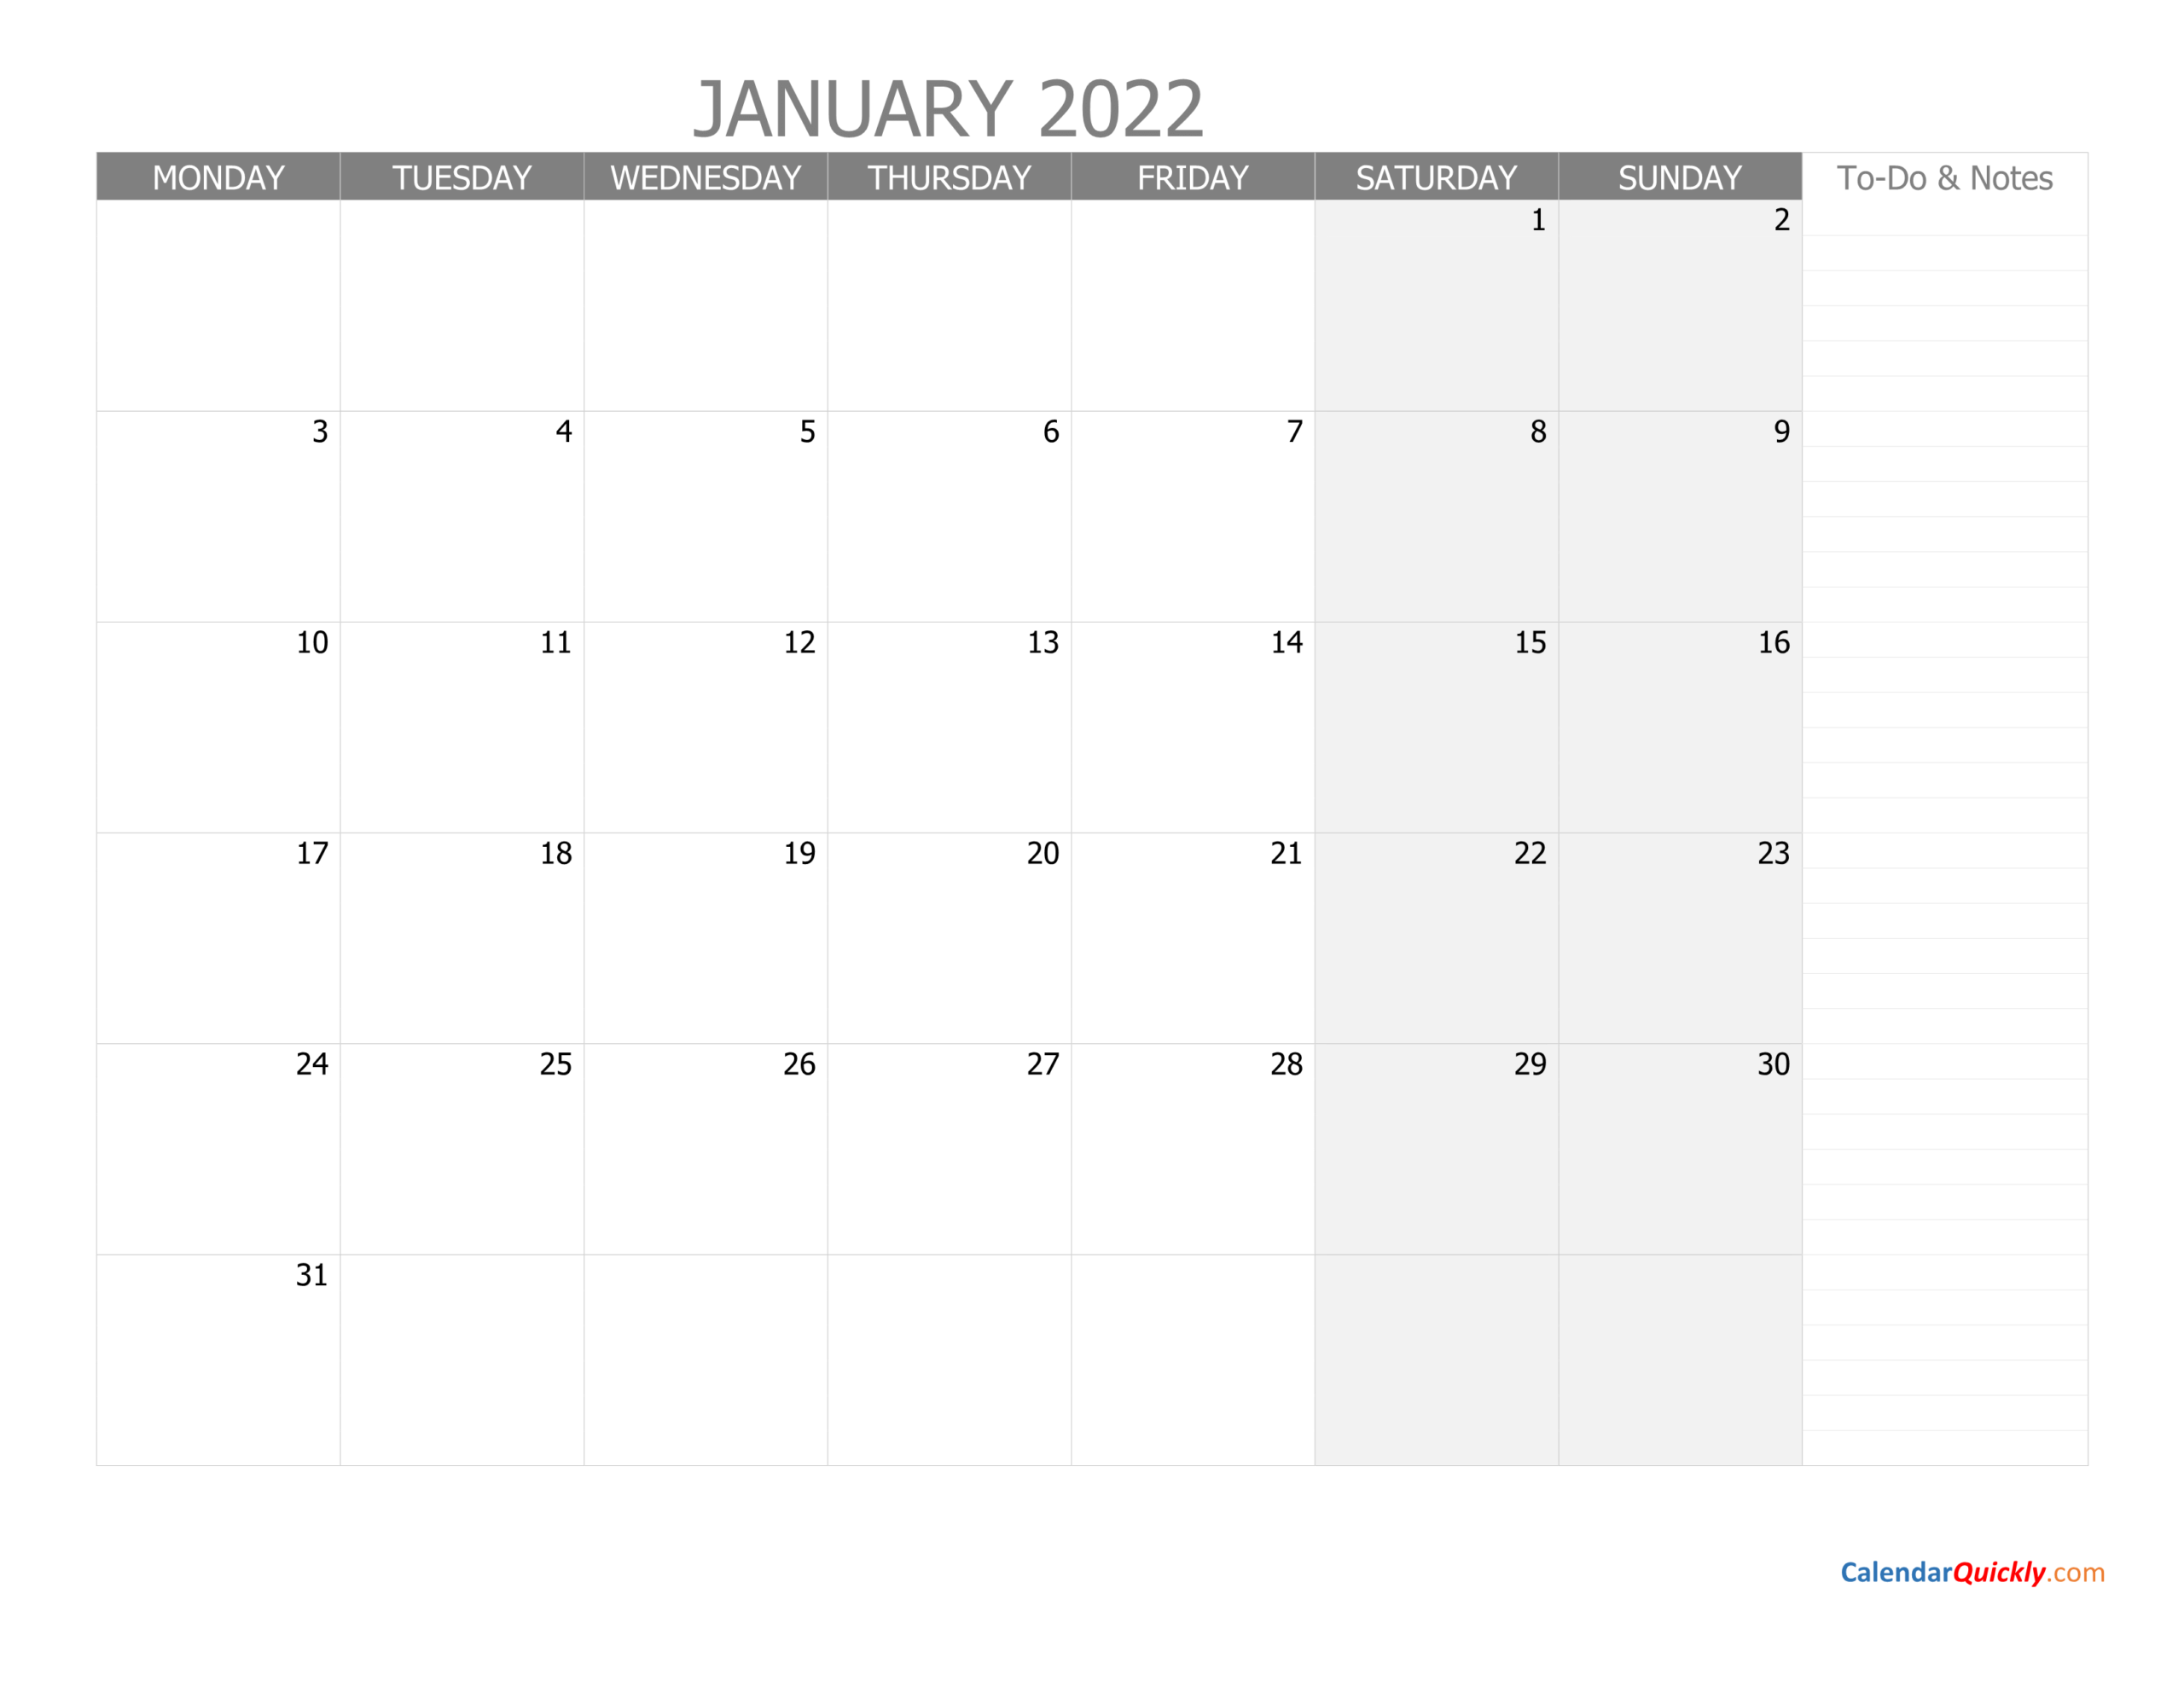 January Monday Calendar 2022 With Notes | Calendar Quickly